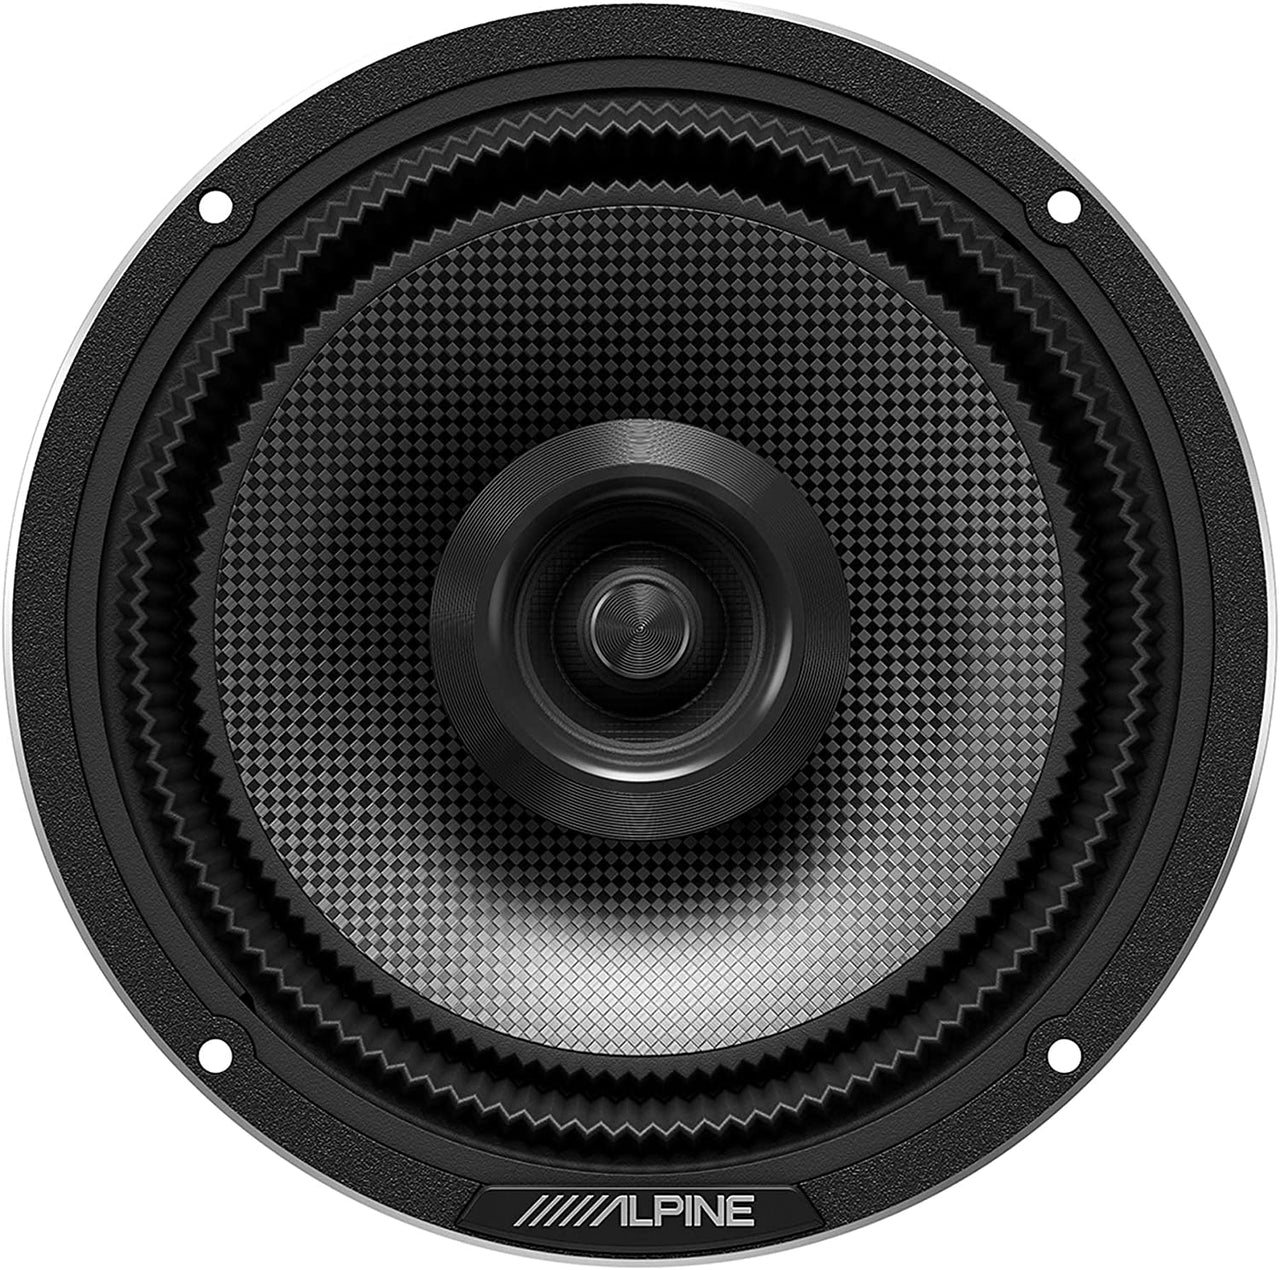 Alpine HDZ-65 600W Status Hi-Res 6.5” (16.5cm) 2-way Coaxial Speakers